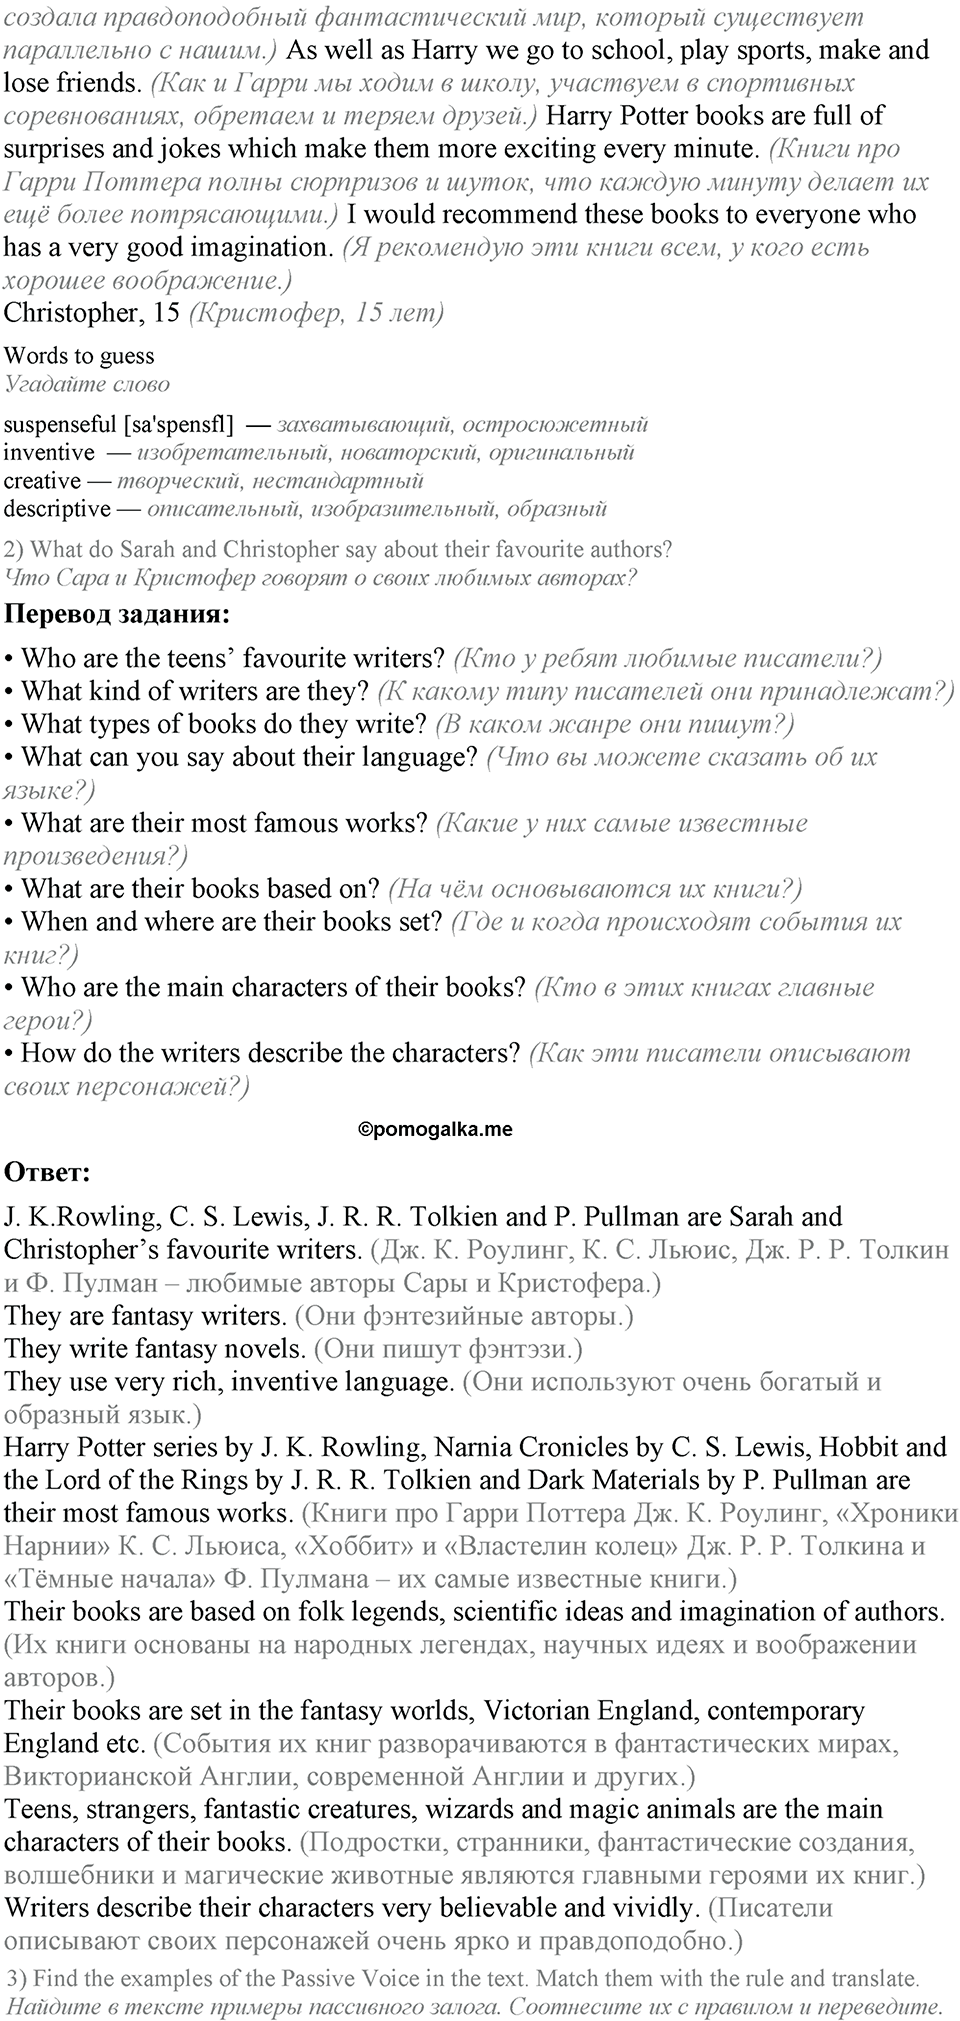 Lesson 3 Exercises №1 английский язык 9 класс Кузовлев Students book